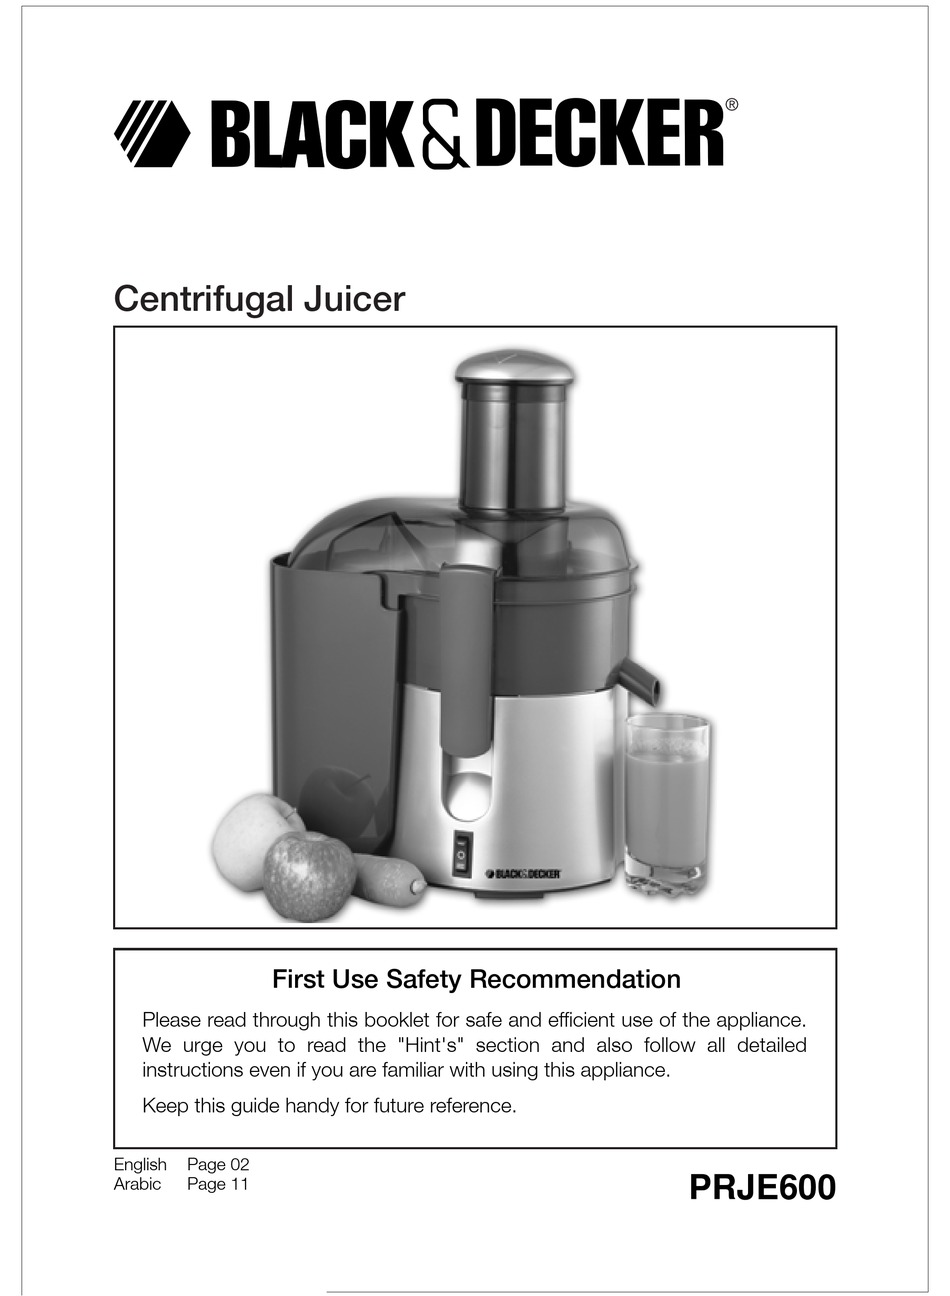 Black & Decker Citrus Juicer CJ600